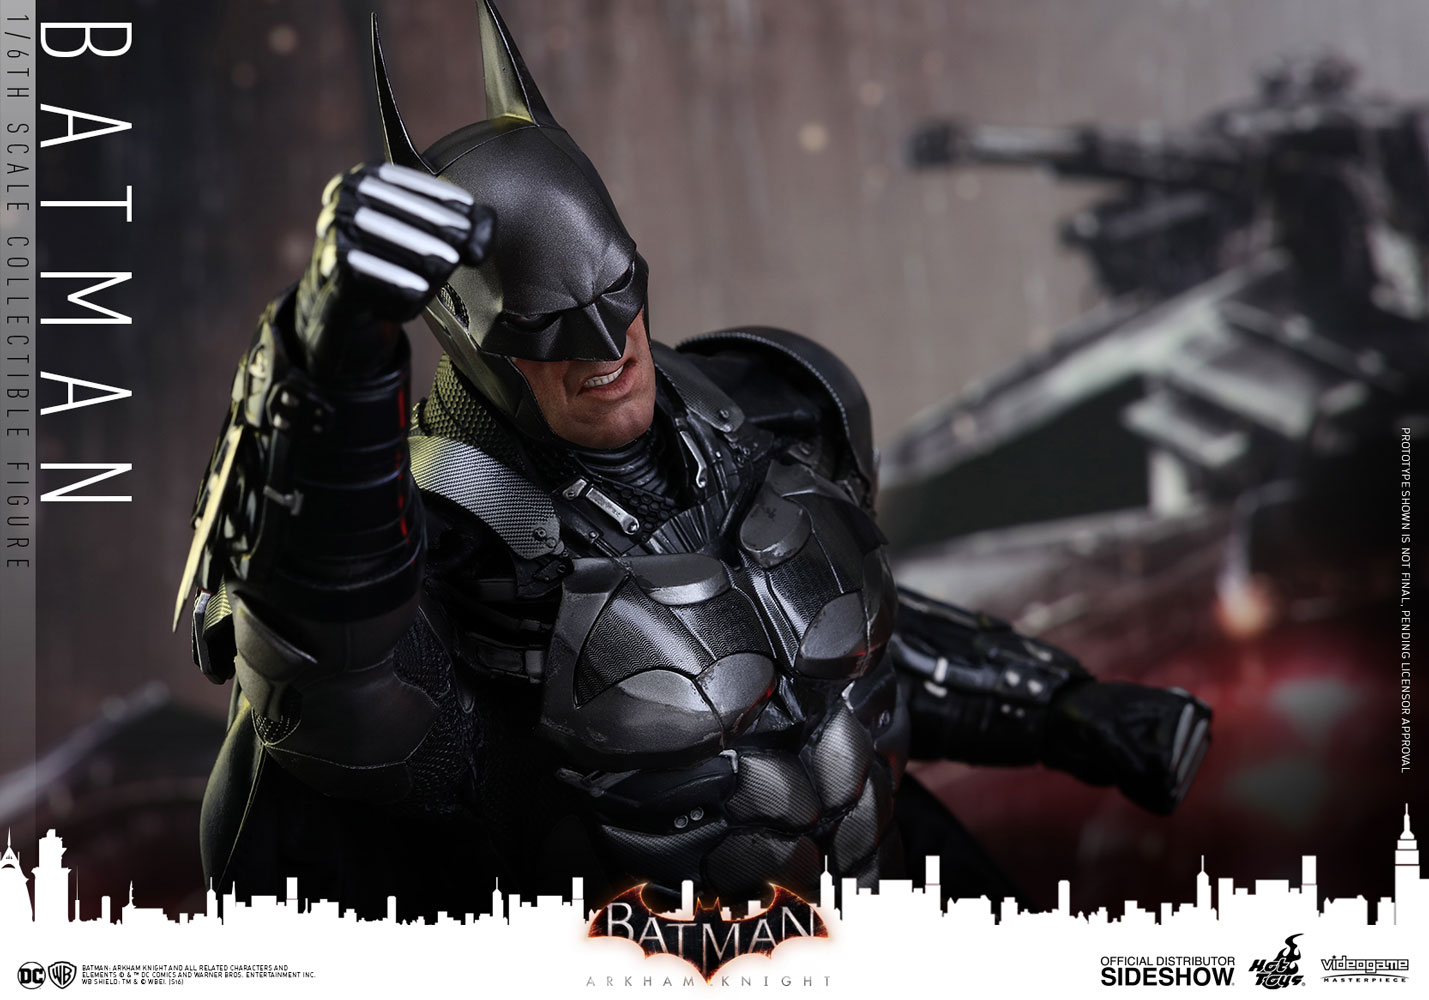 Toys] Hot Toys unveils new Batman sixth-scale figure — Major